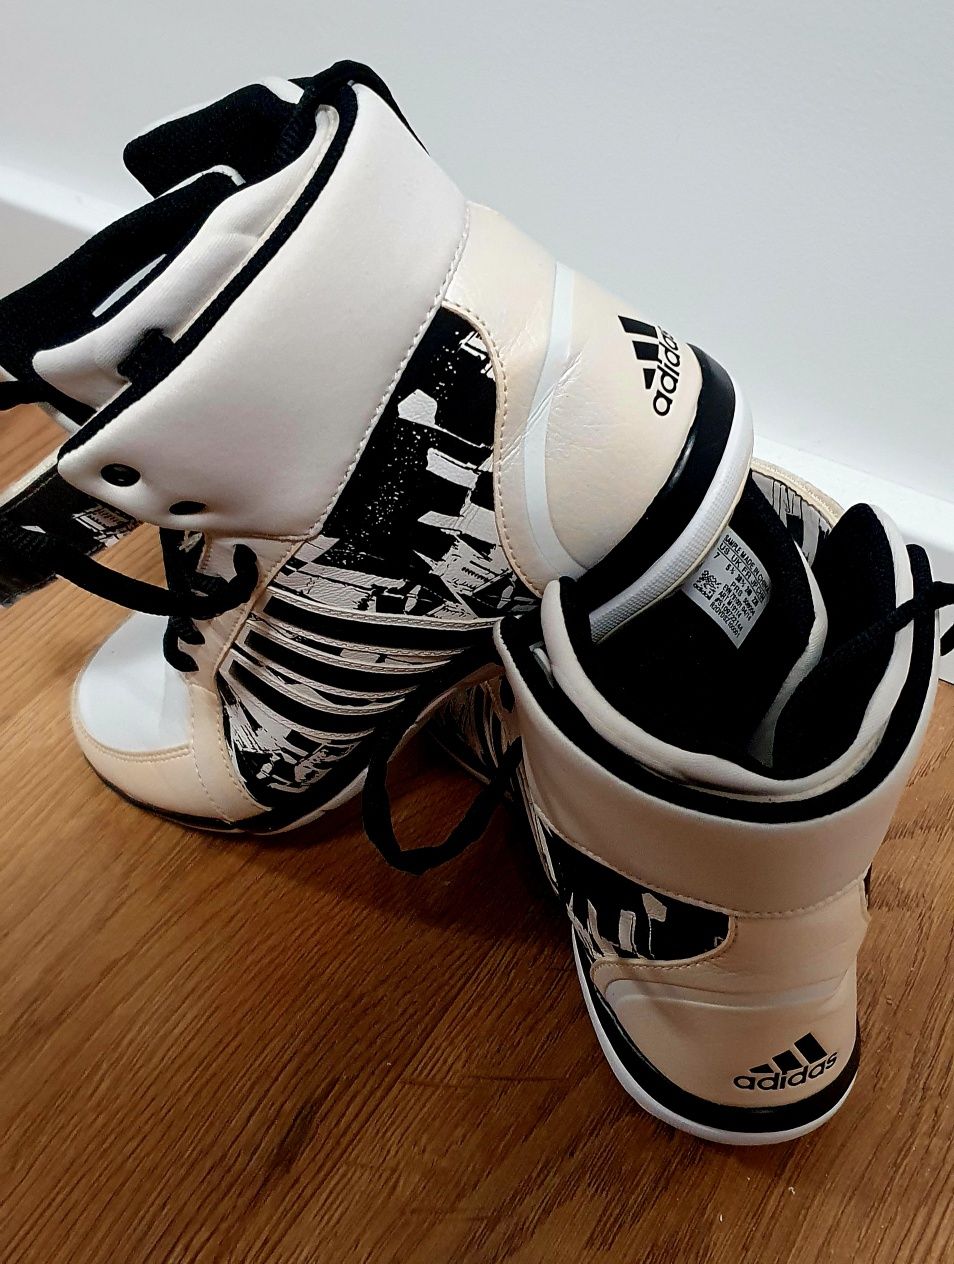 Adidas sample nr 38.5 originali